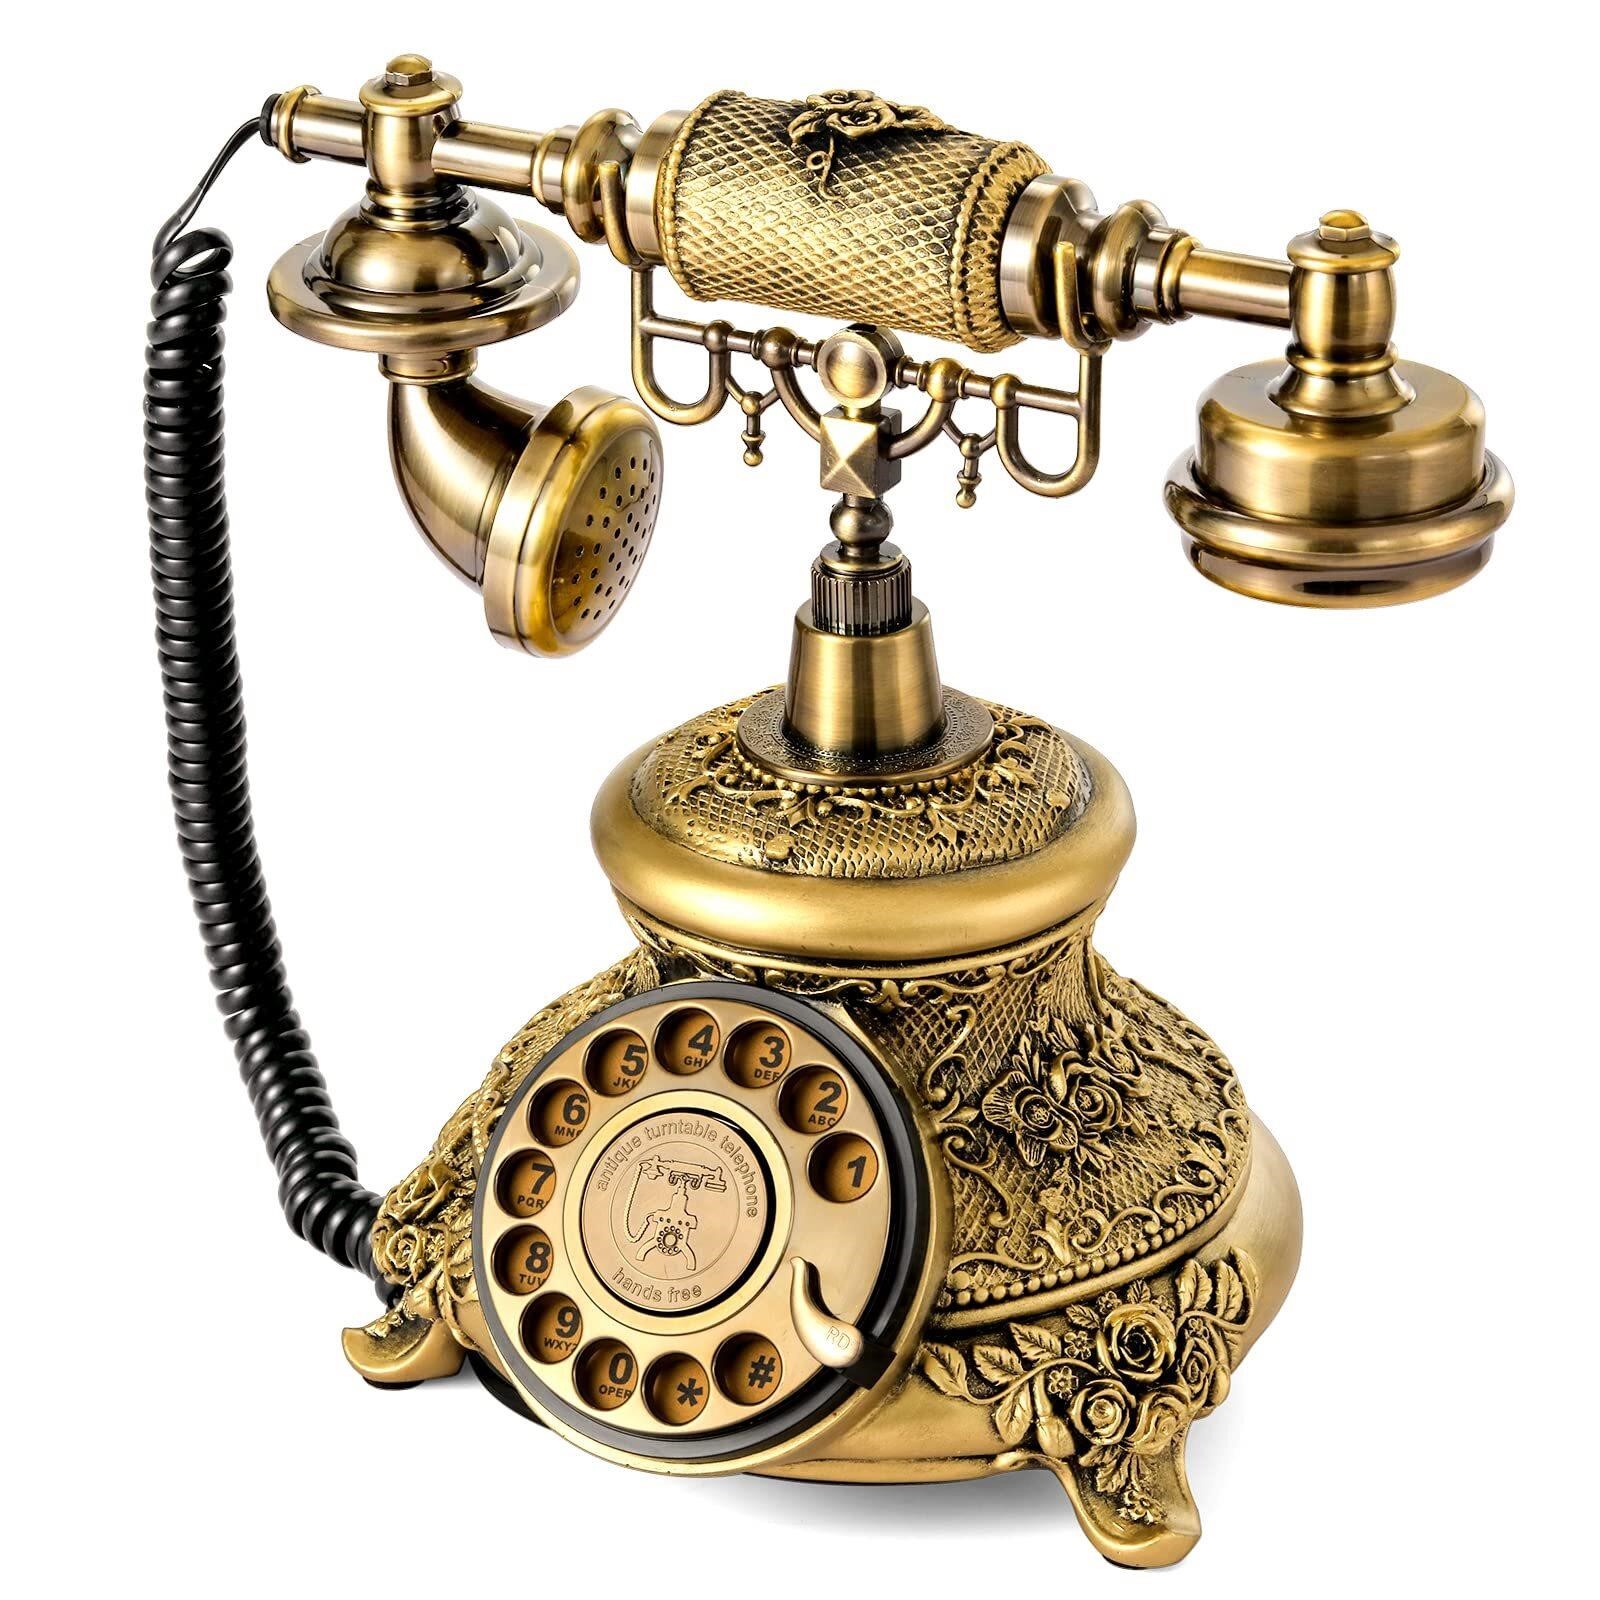 WICHEMI Vintage Phone Retro Rotary Dial Phone